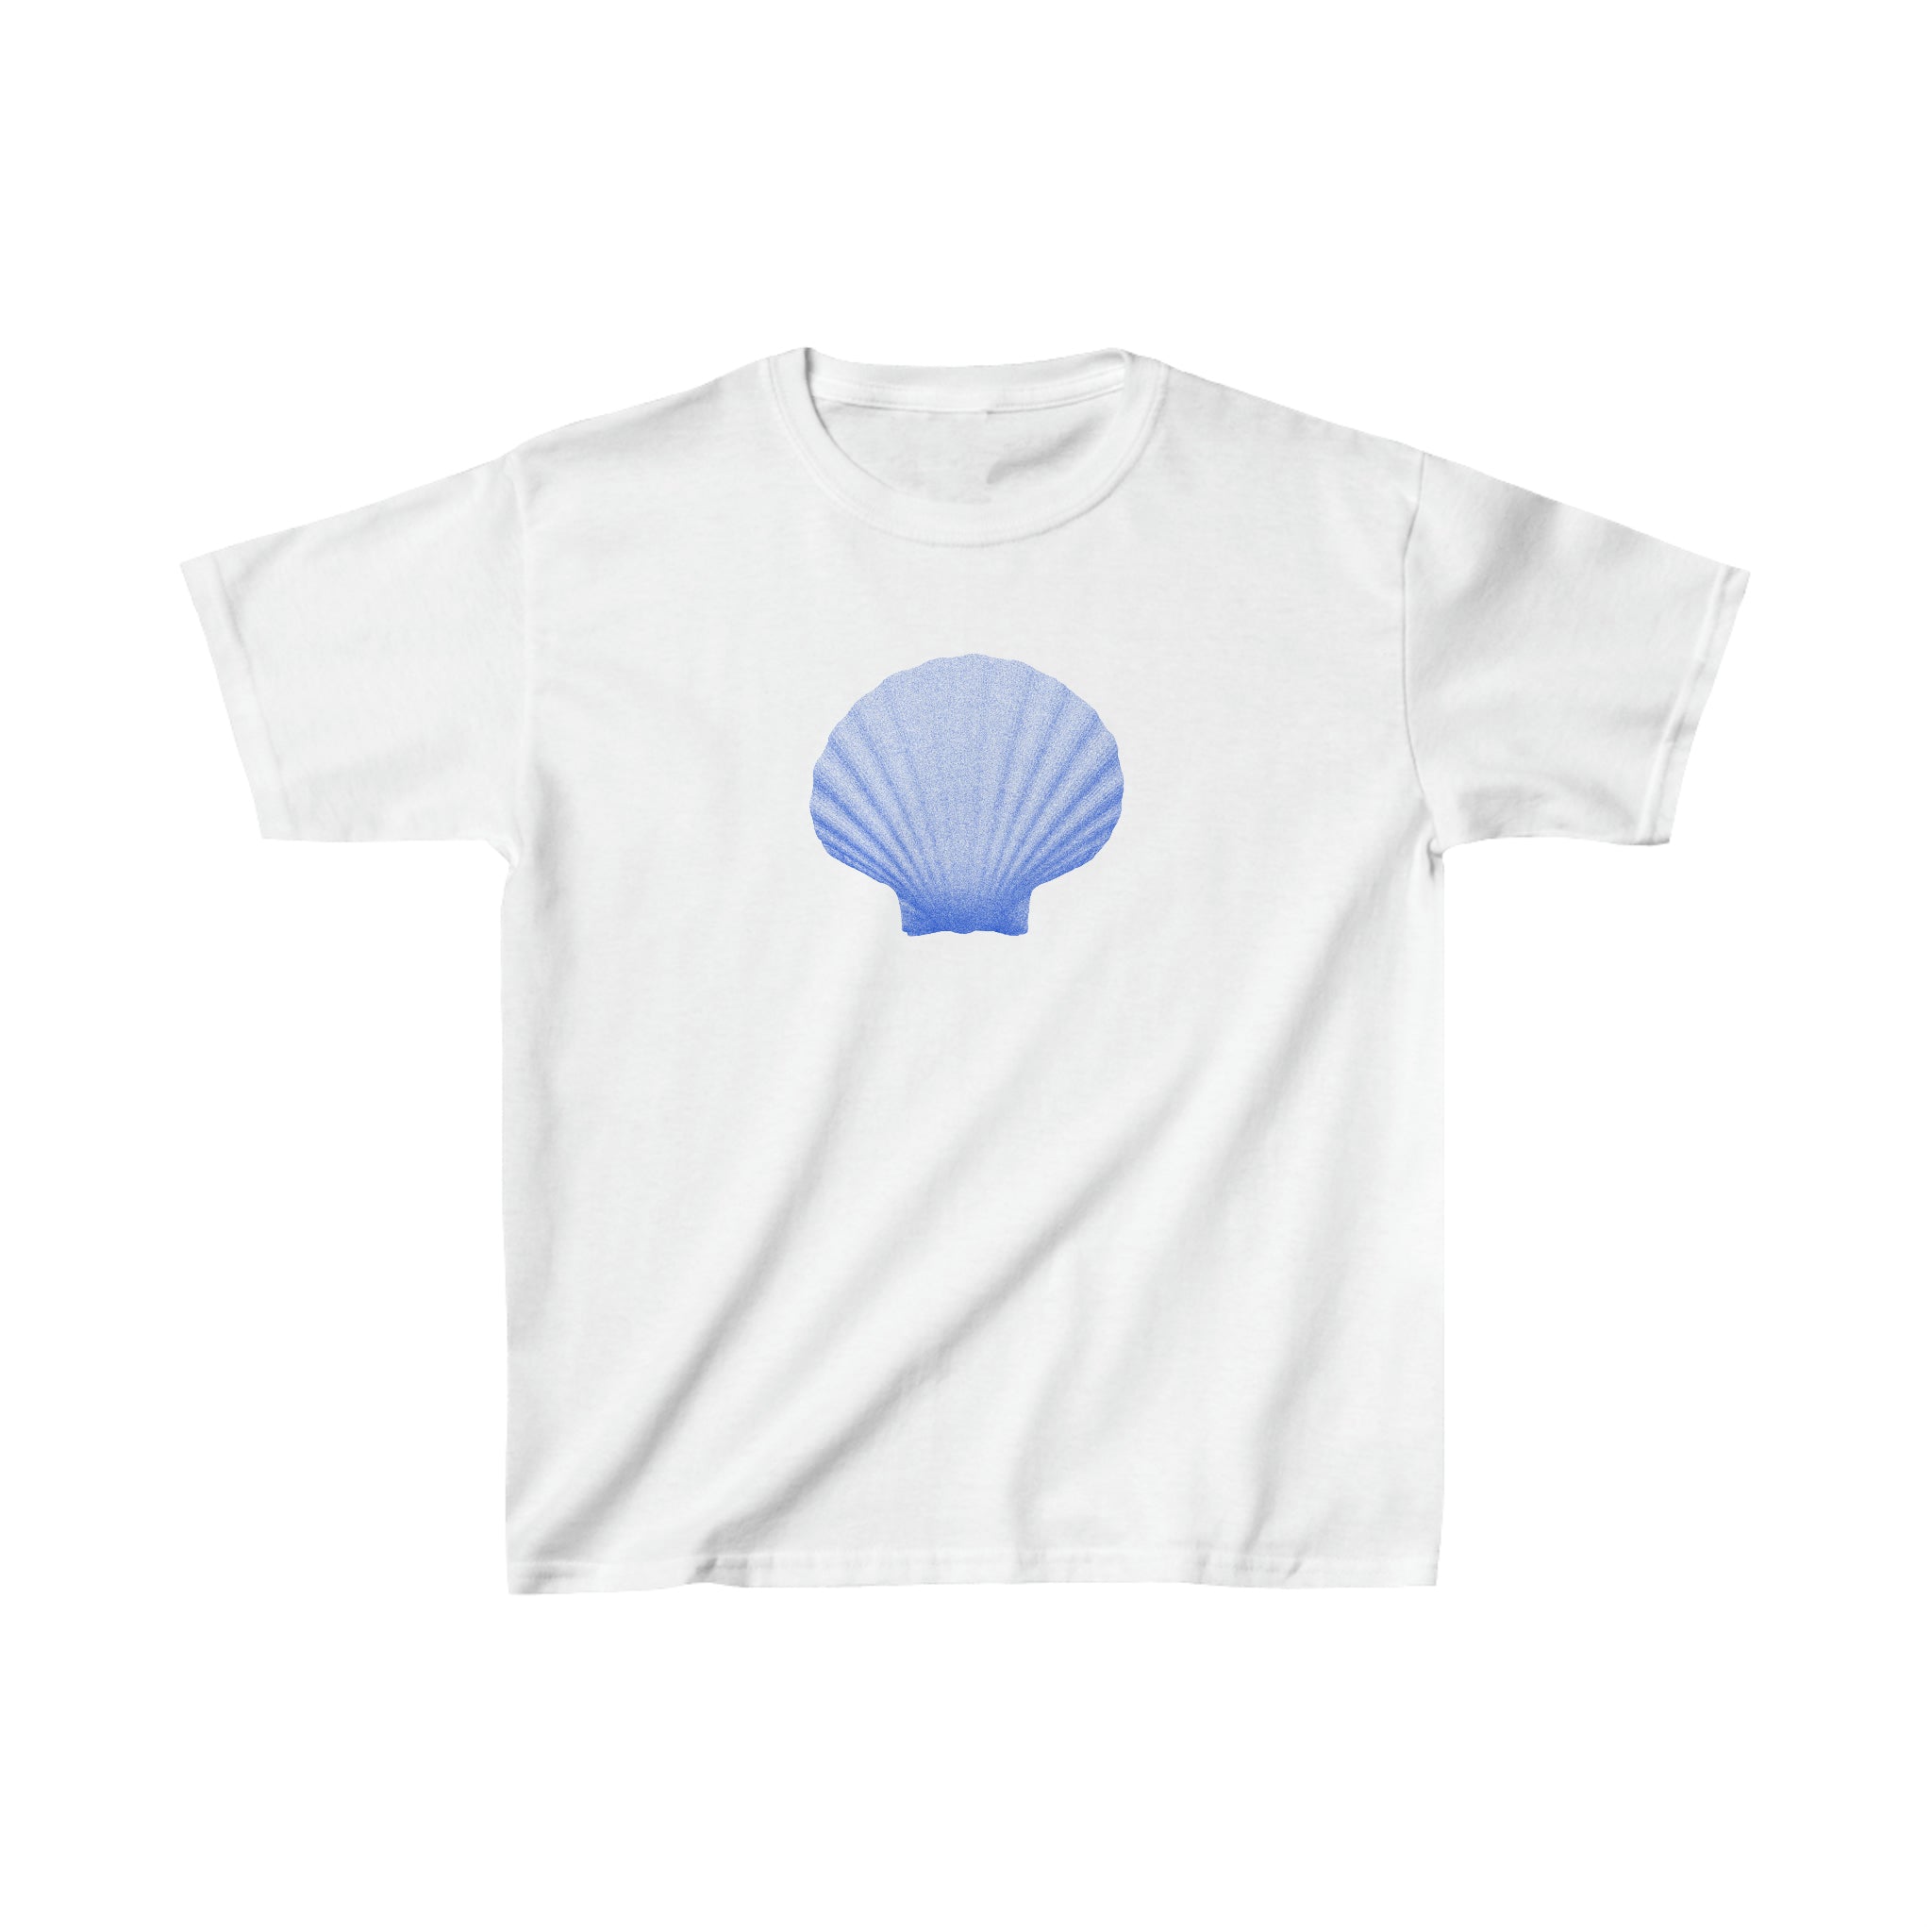 Short sleeve t-shirt with a-shape - White - Sz. 42-60 - Zizzifashion